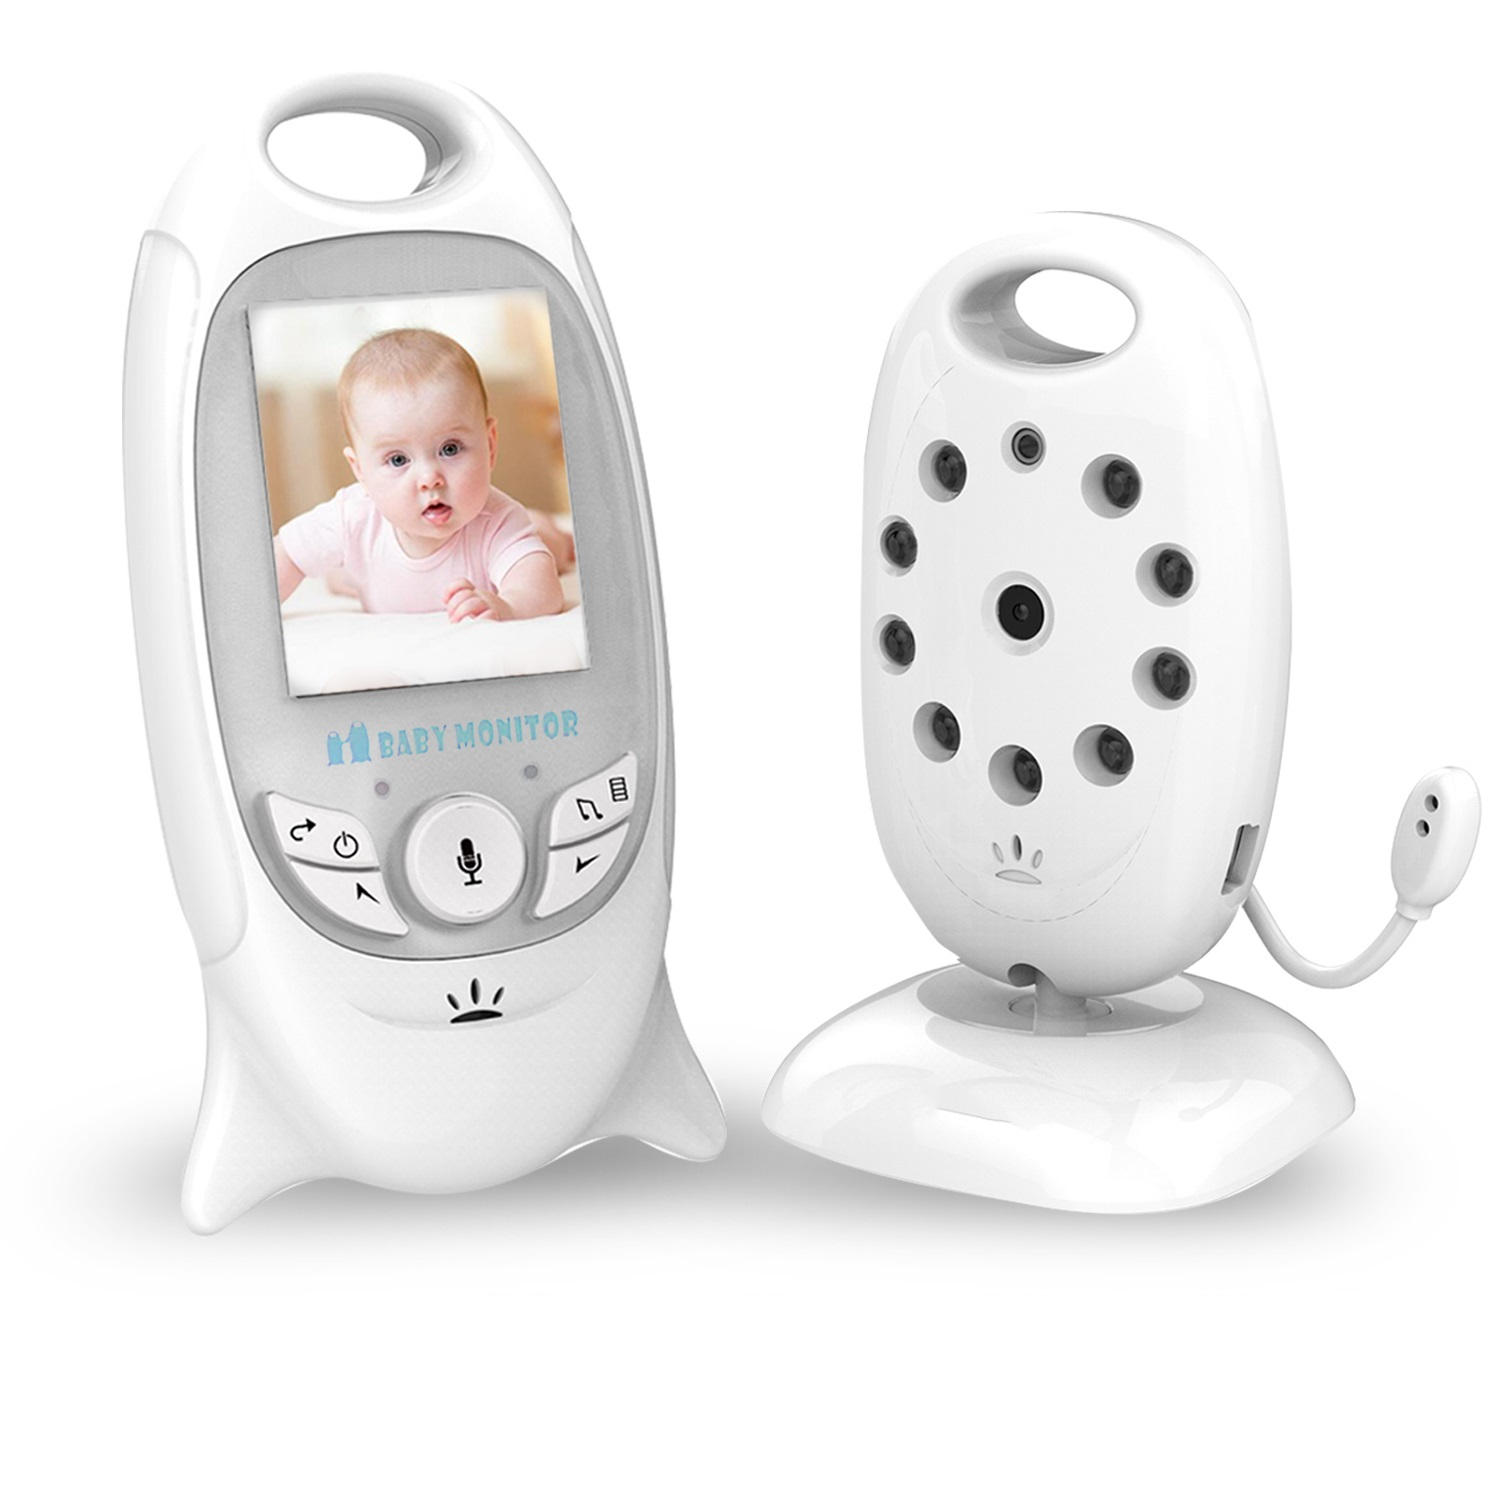 Monitor Baby FOXSPORT Babyphone